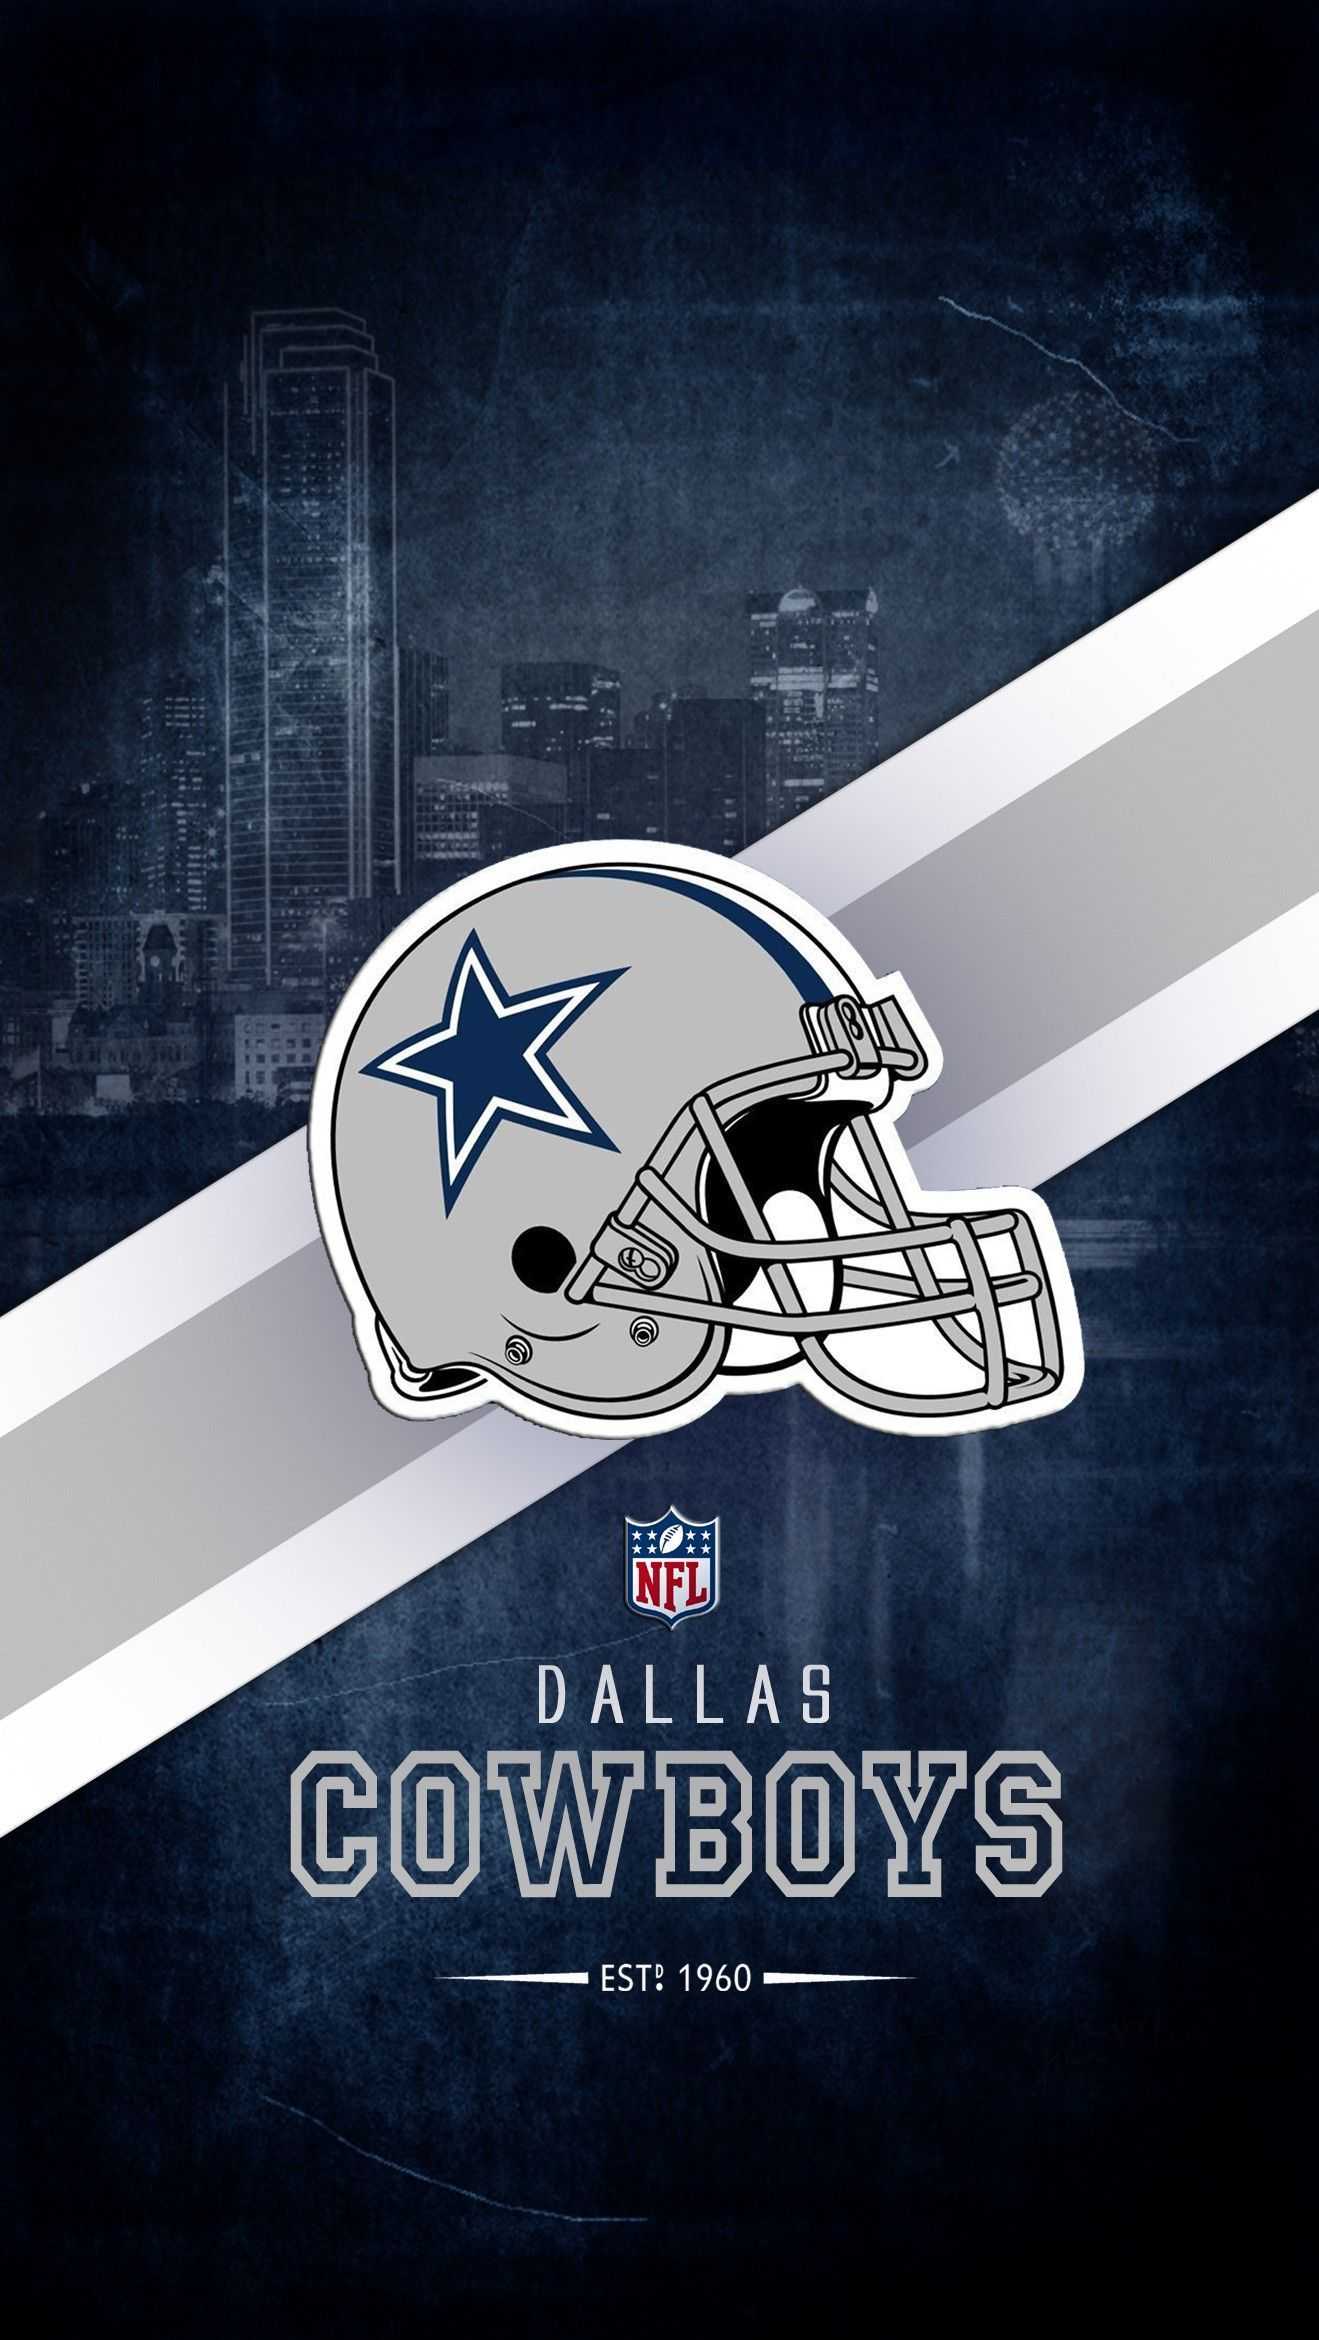 Dallas Cowboys Wallpaper - iXpap